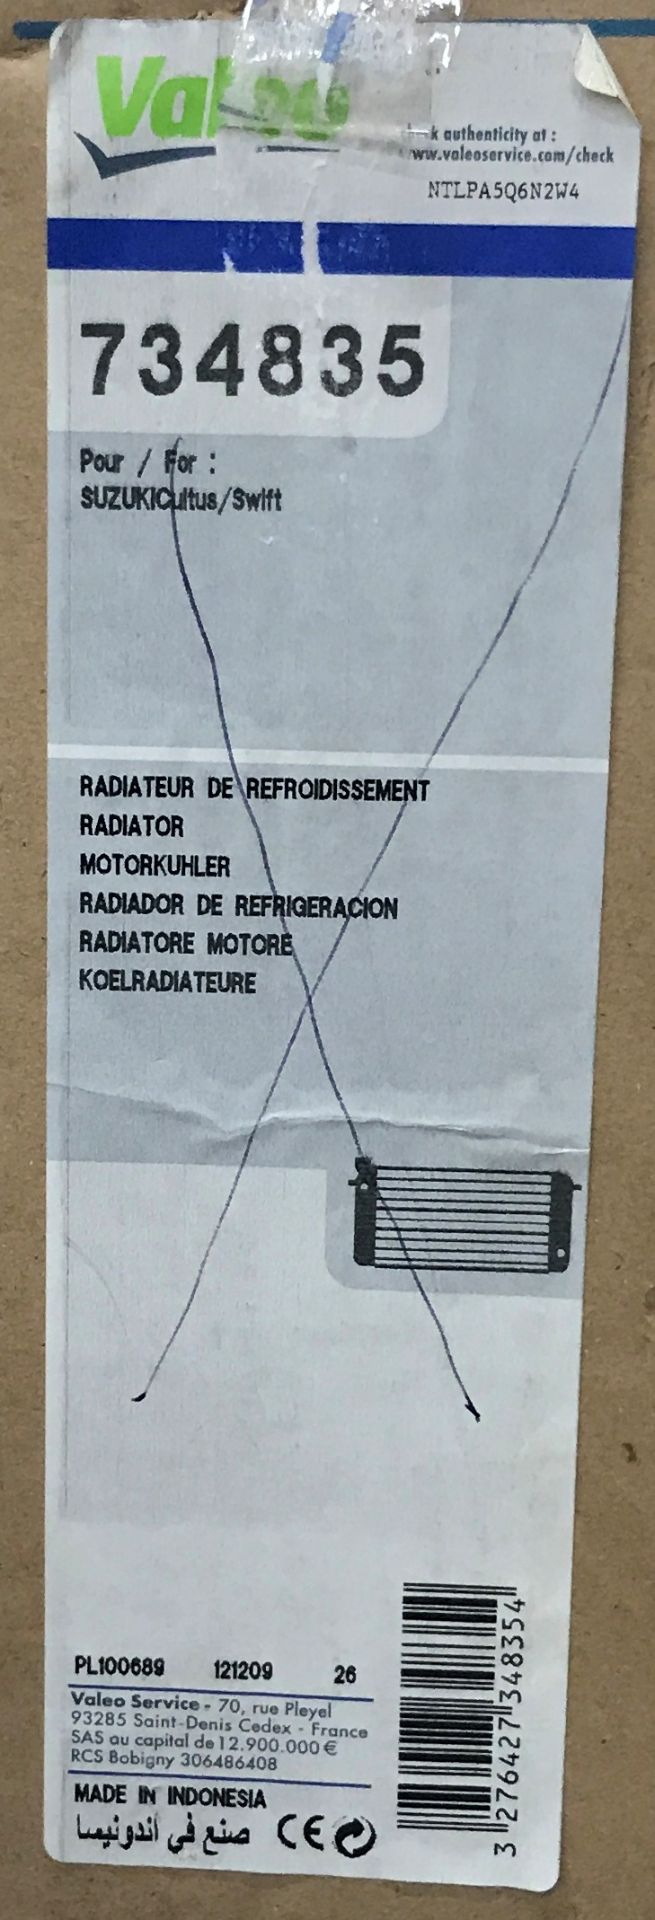 Valeo Car Radiator Item Code: 734835 - Image 2 of 2